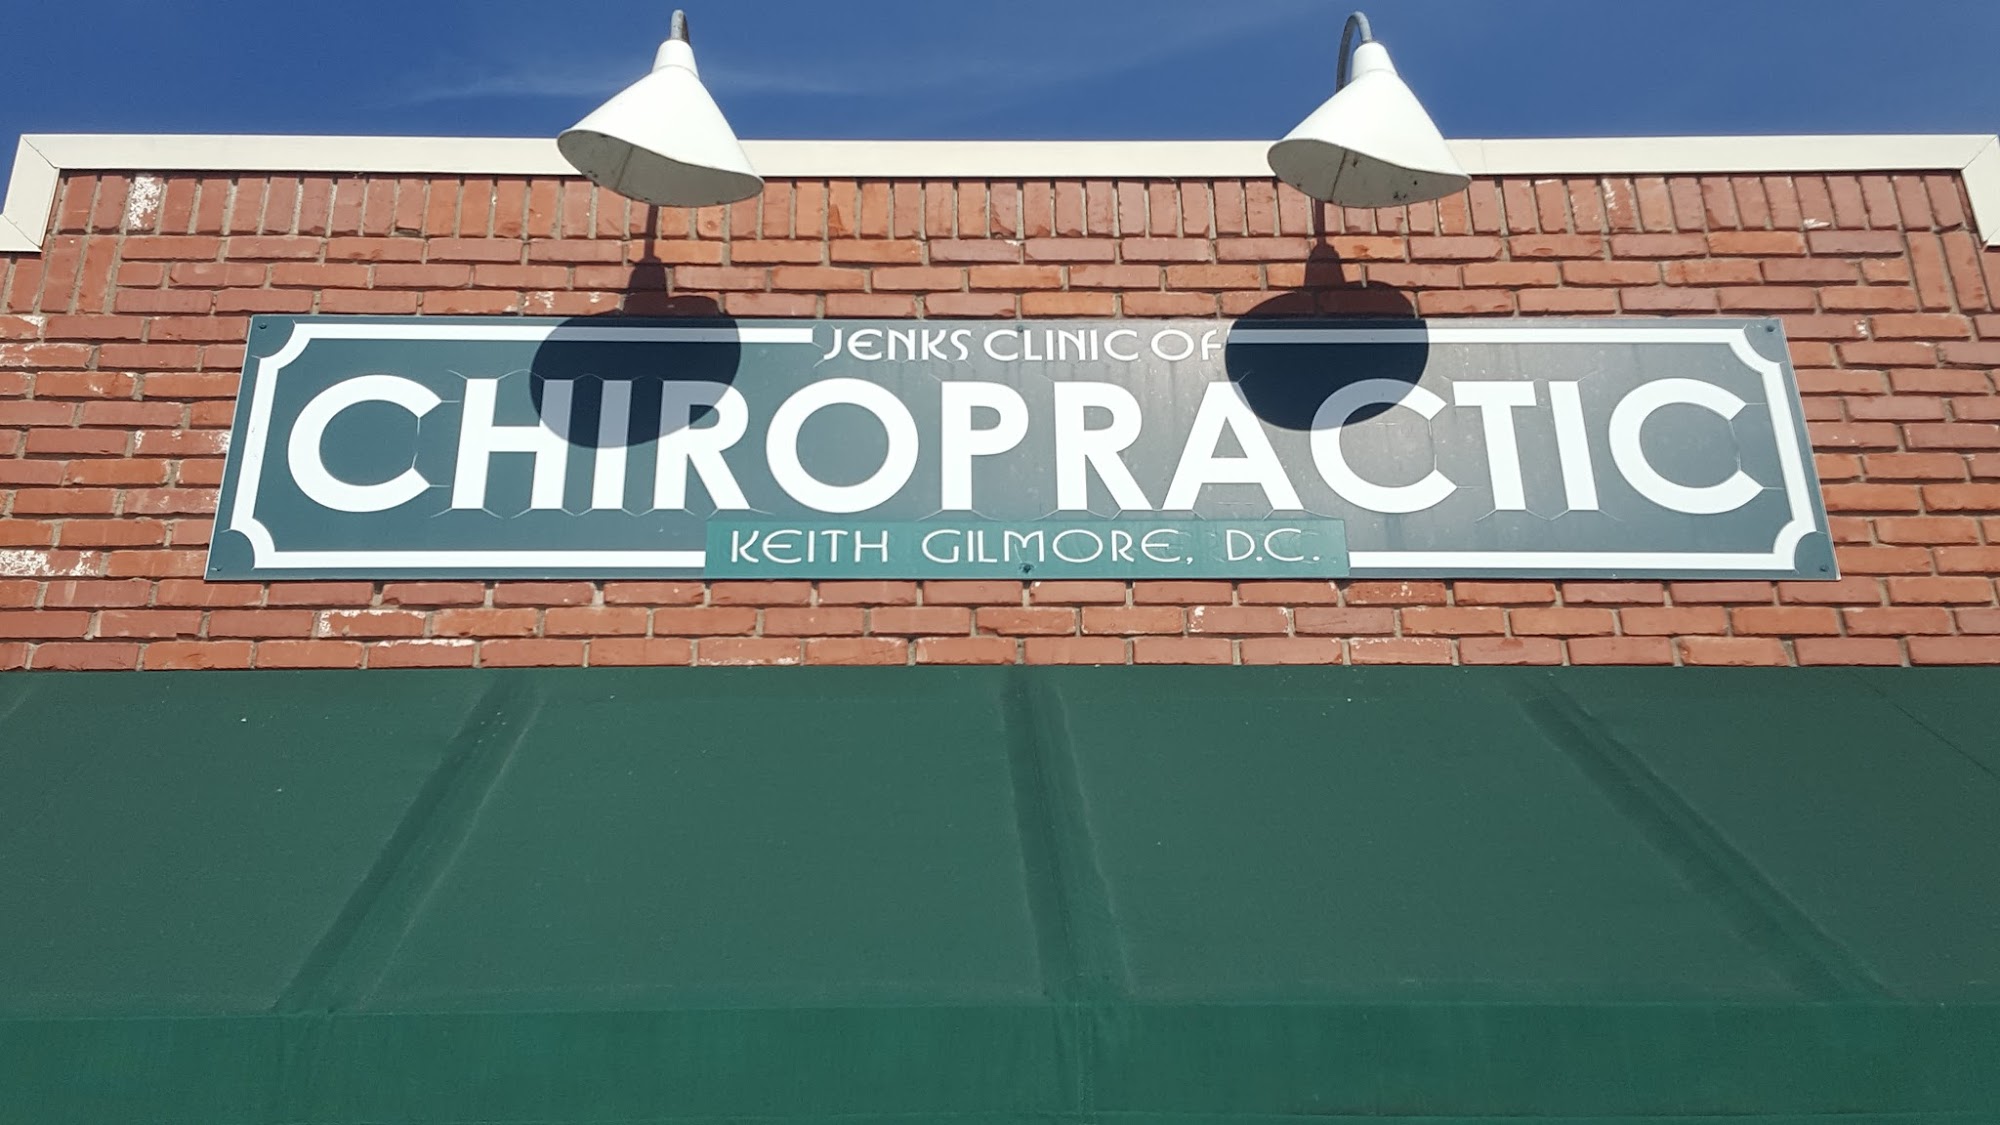 Jenks Clinic of Chiropractic (William K. Gilmore, DC)